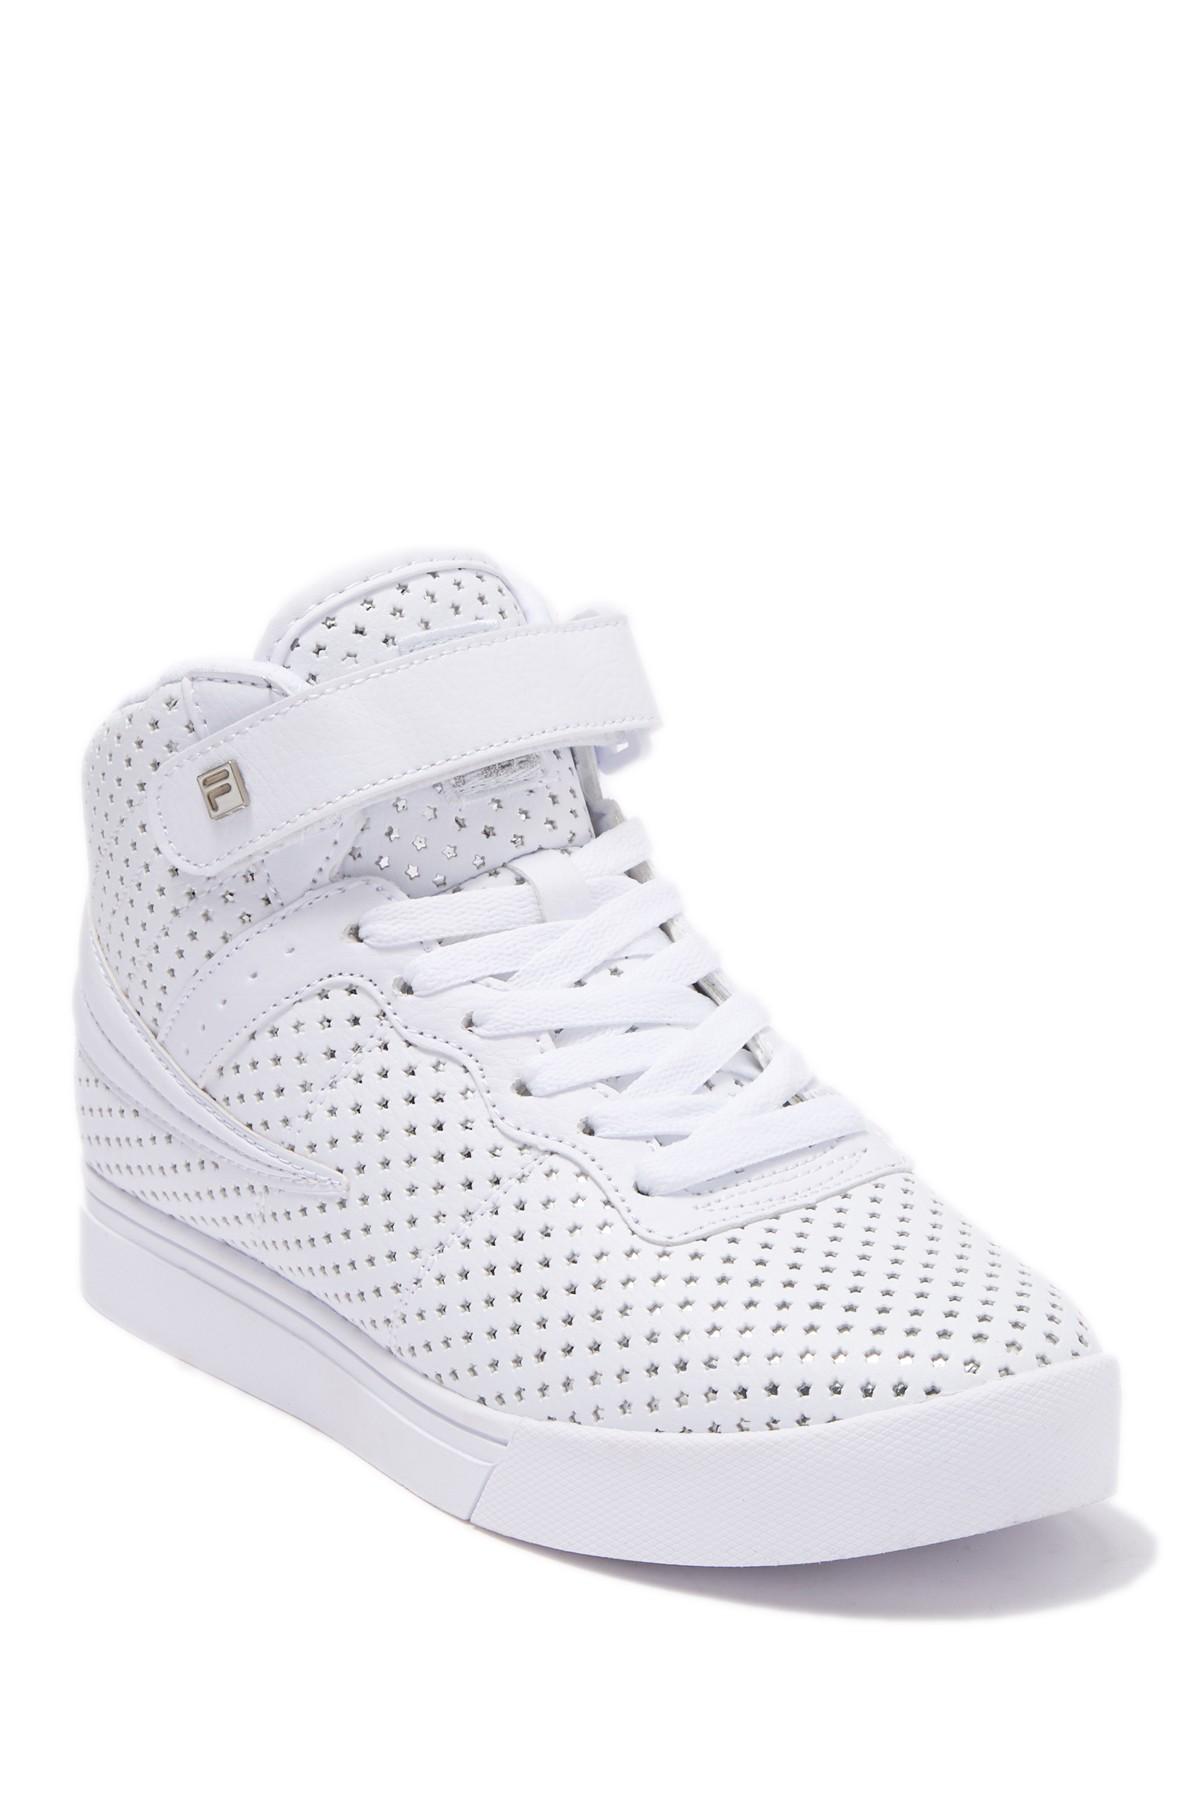 Fila Lace Vulc 13 Stars Sneaker in White - Lyst